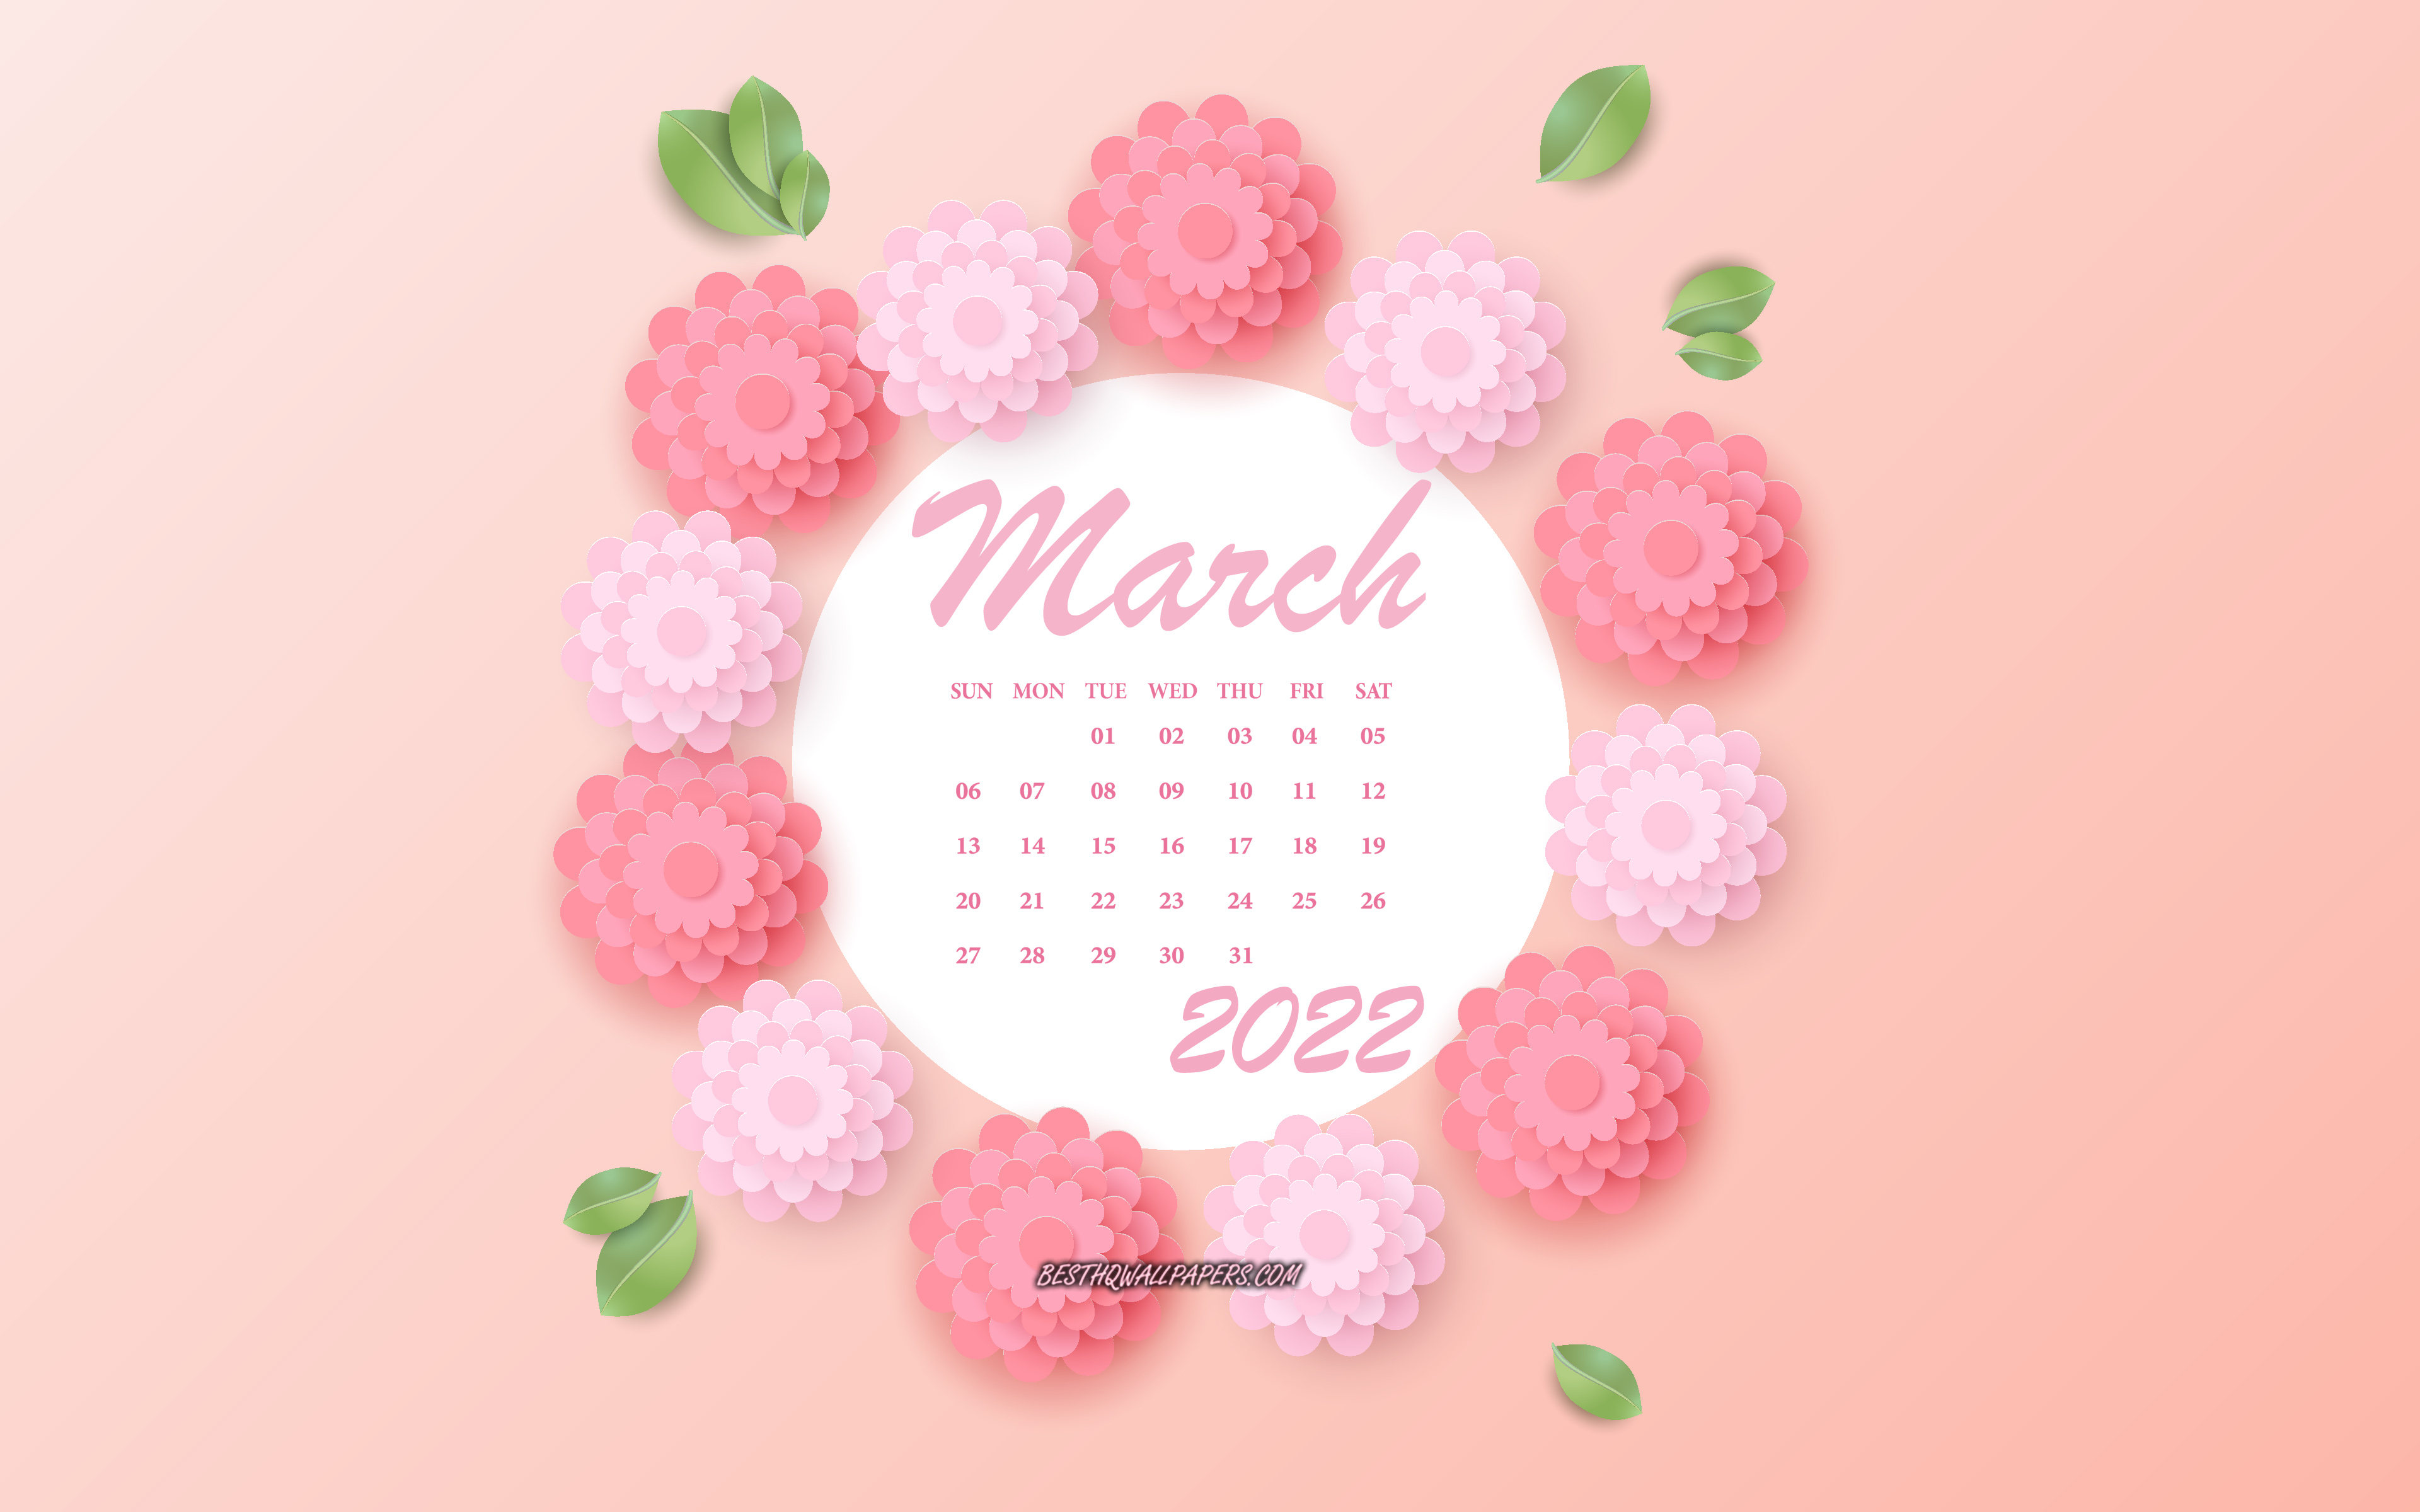 Download wallpaper March 2022 Calendar, 4k, pink flowers, March, 2022 spring calendars, 3D paper pink flowers, 2022 March Calendar for desktop with resolution 3840x2400. High Quality HD picture wallpaper